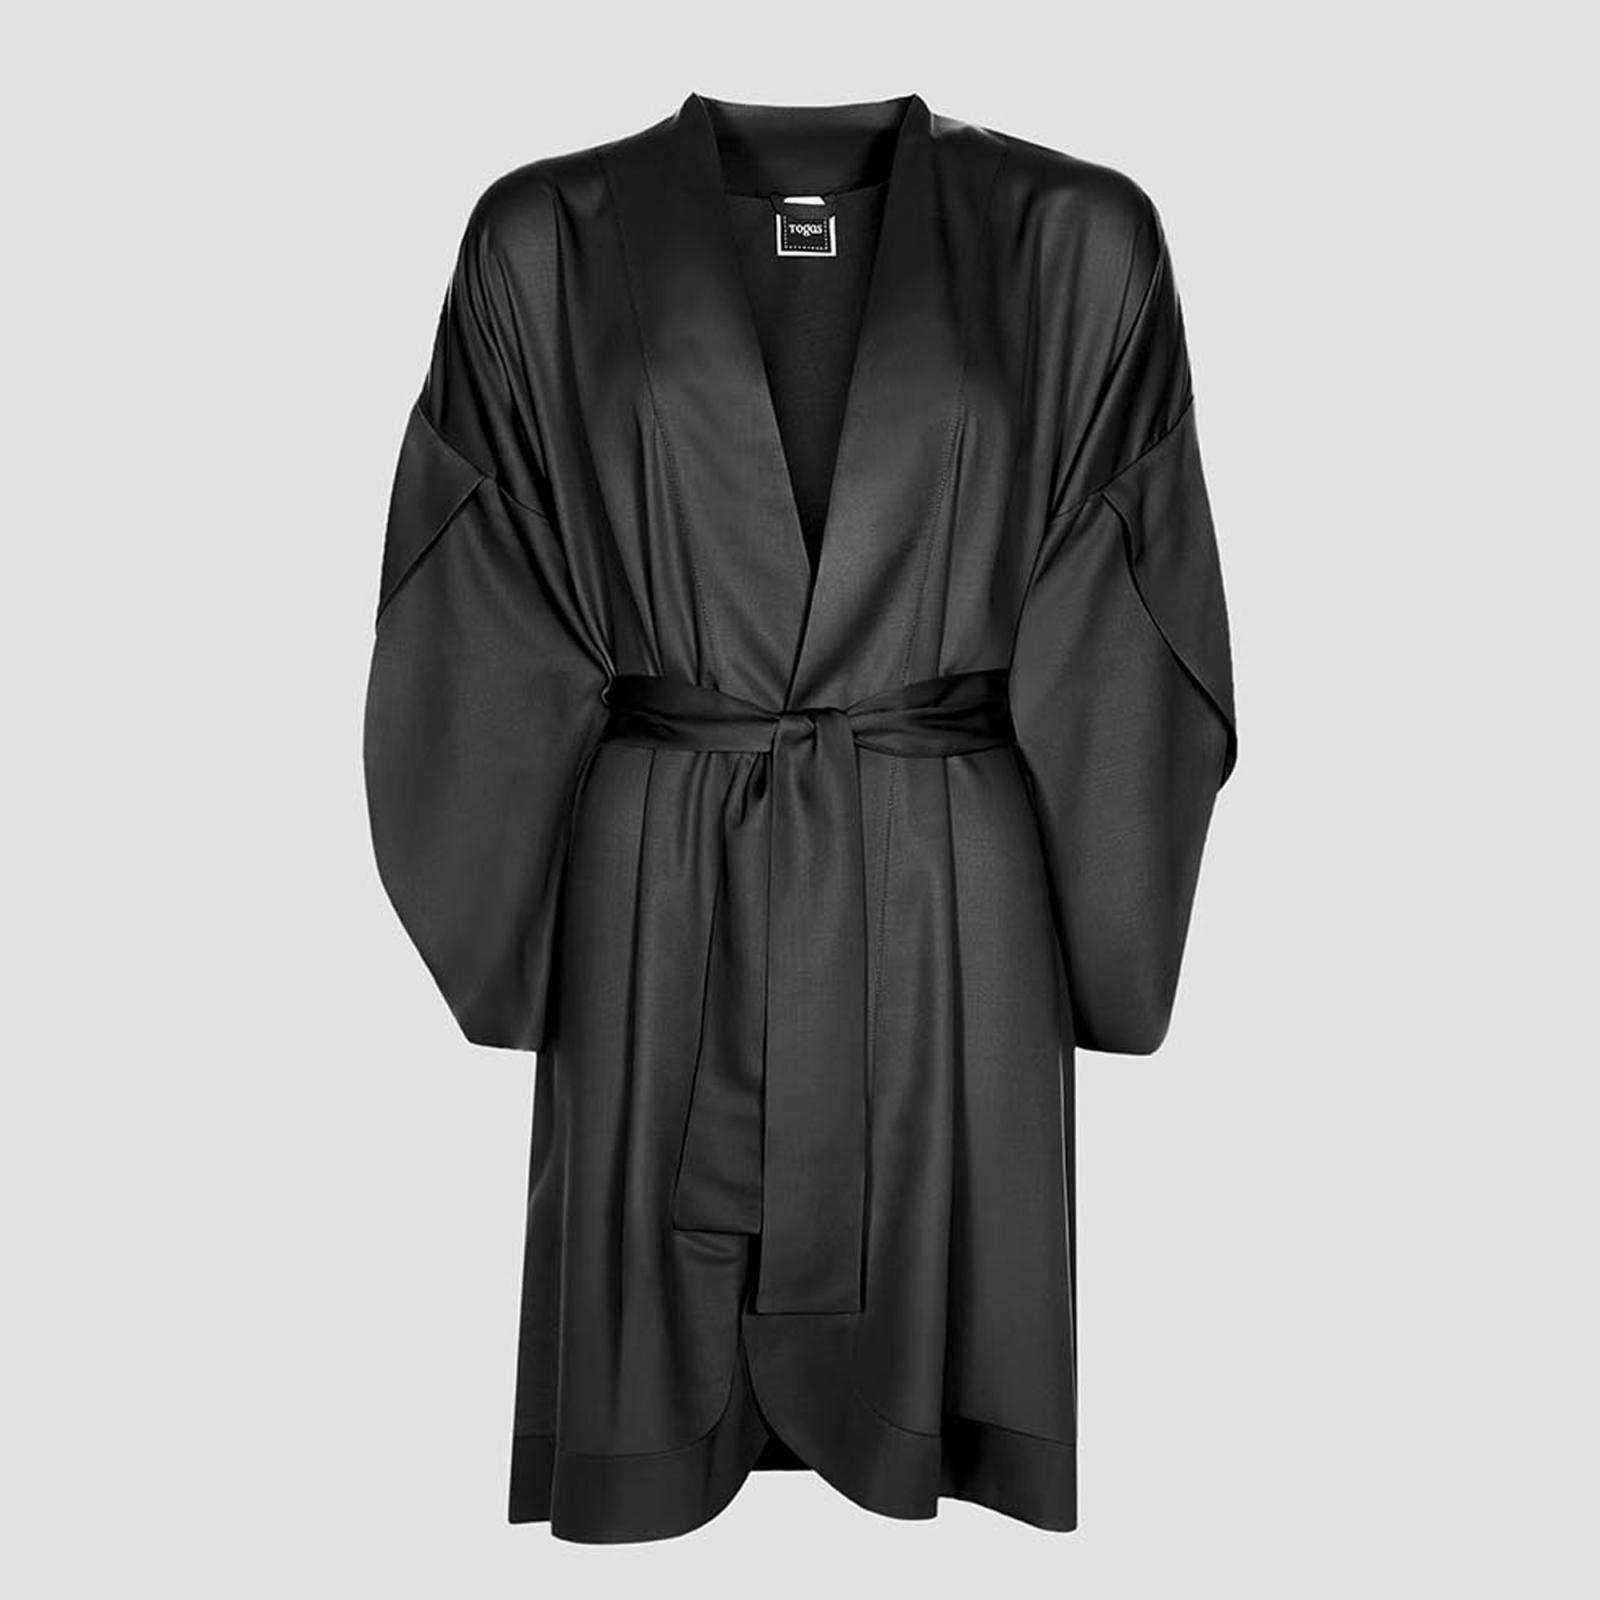 фото Халат-кимоно короткое togas наоми чёрное s (44)